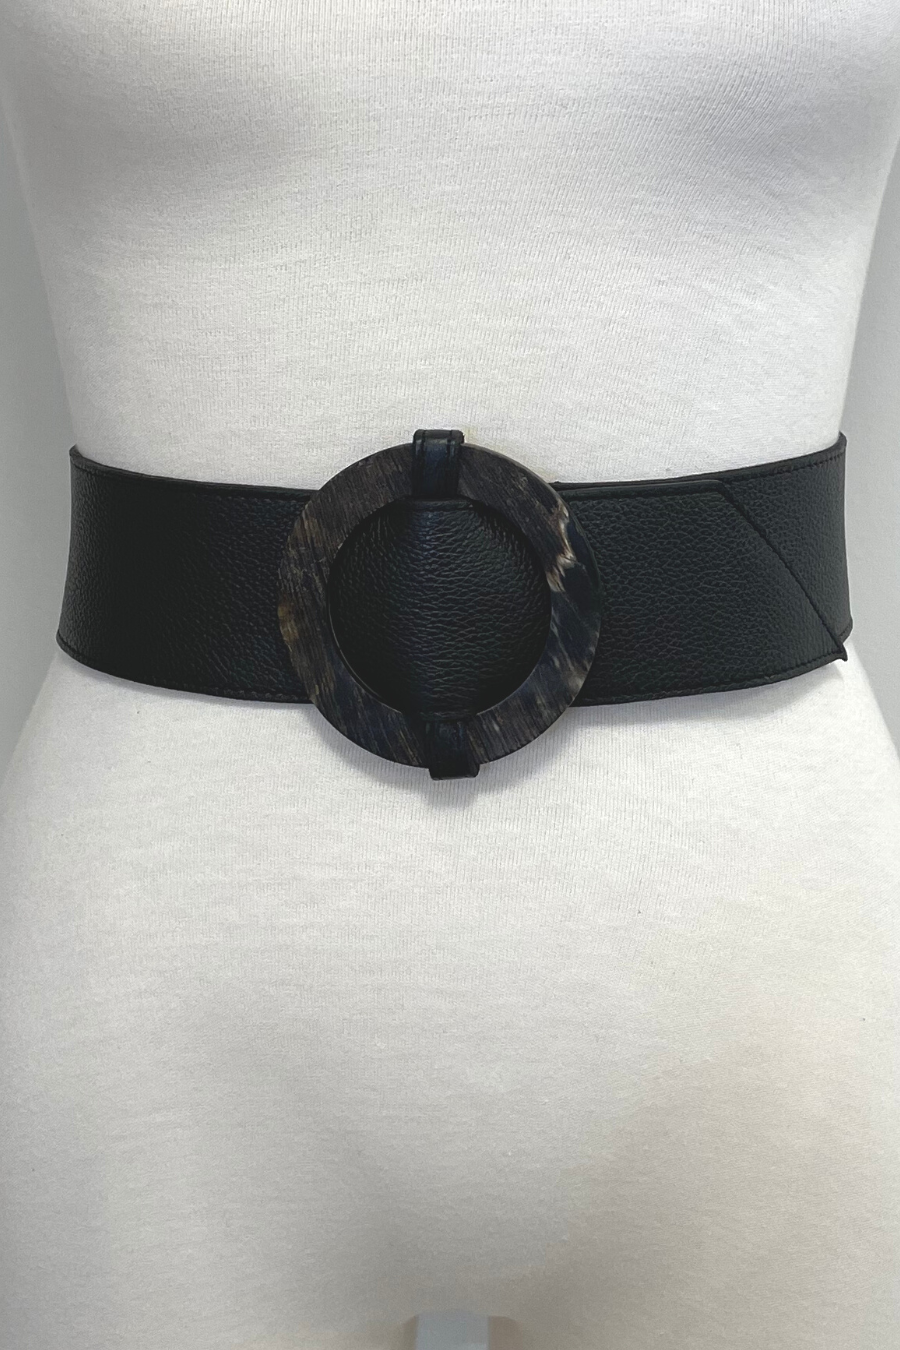 Distressed Finish Round Buckle Black Pebble Leather Belt